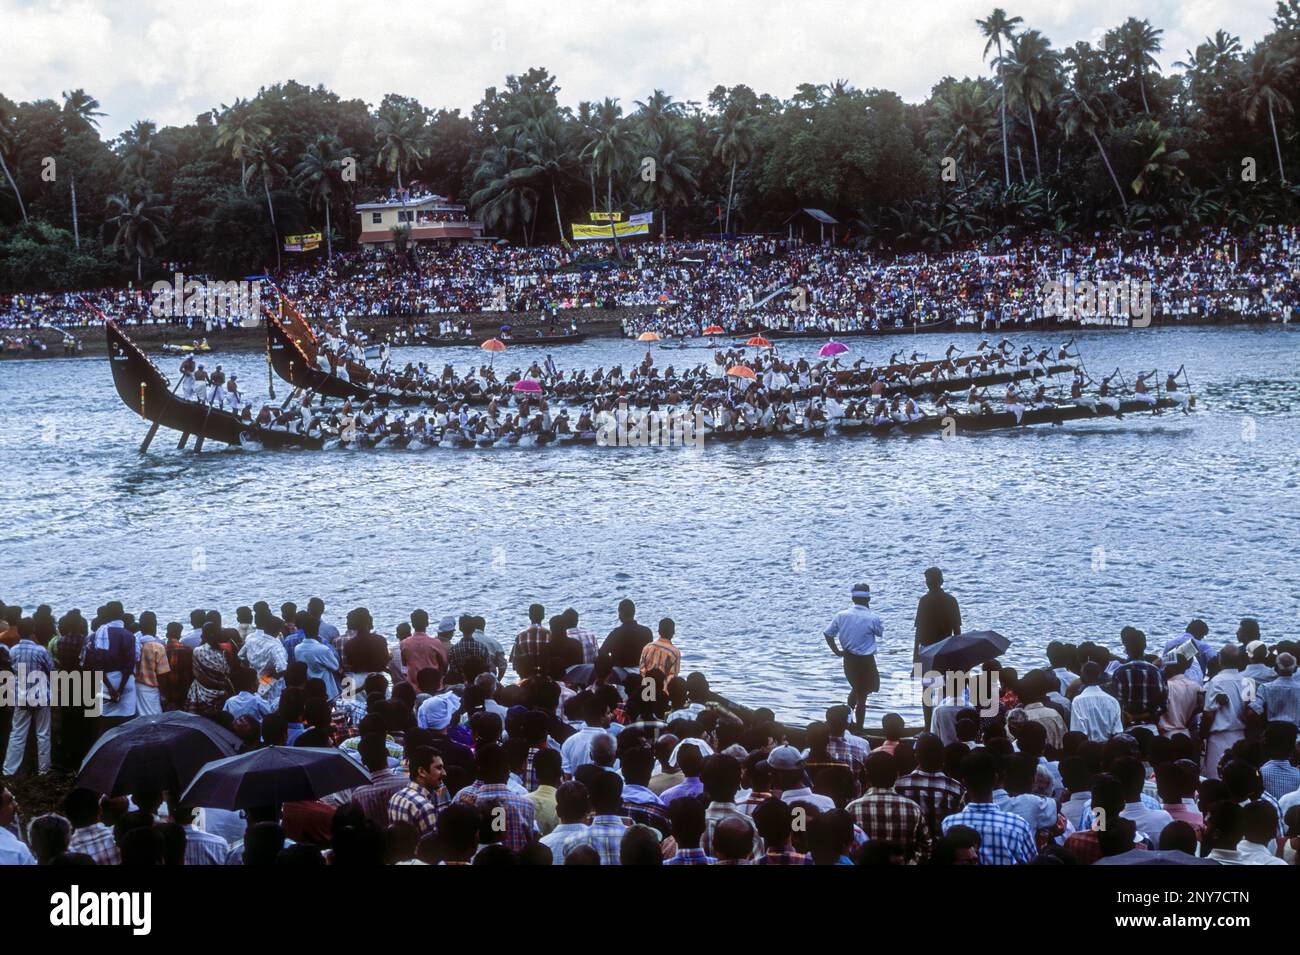 Aranmula Vallamkali Festival, Snake Boat Race, auf dem Pampa River während des Onam Festivals in Aranmula, Kerala, Südindien, Indien, Asien Stockfoto